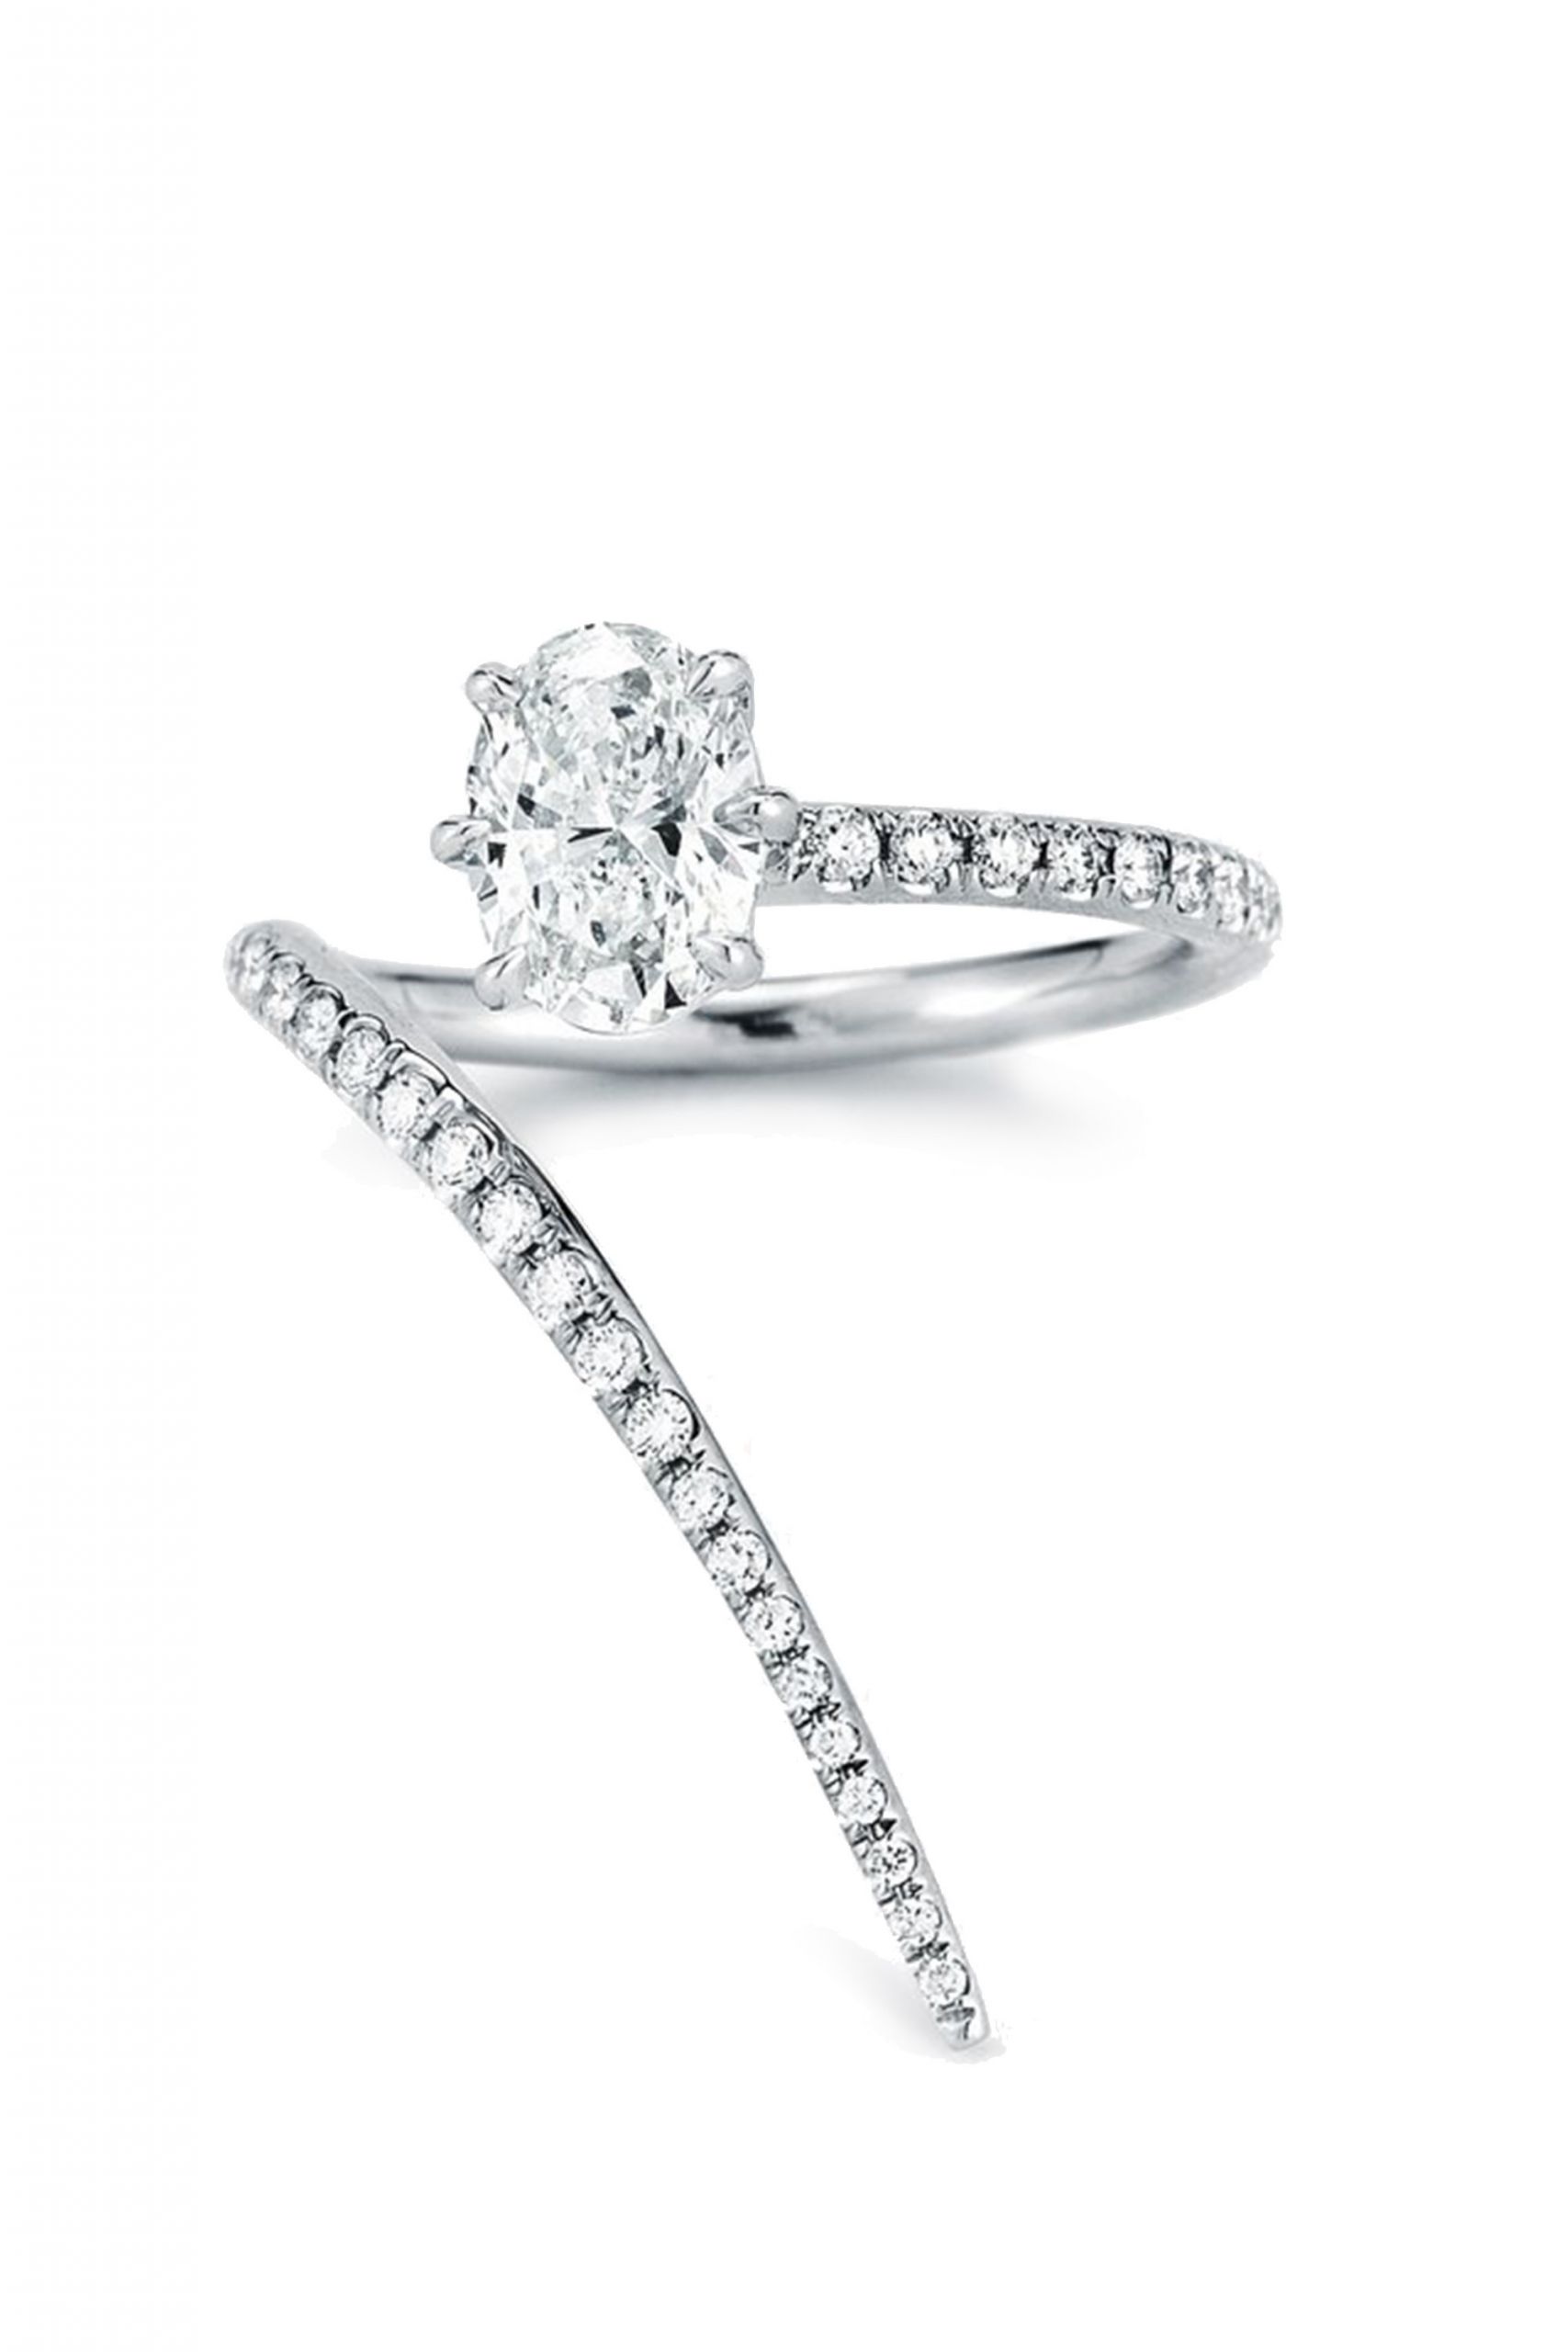 Unique Diamond Wedding Rings
 27 Unique Engagement Rings Beautiful Non Diamond and